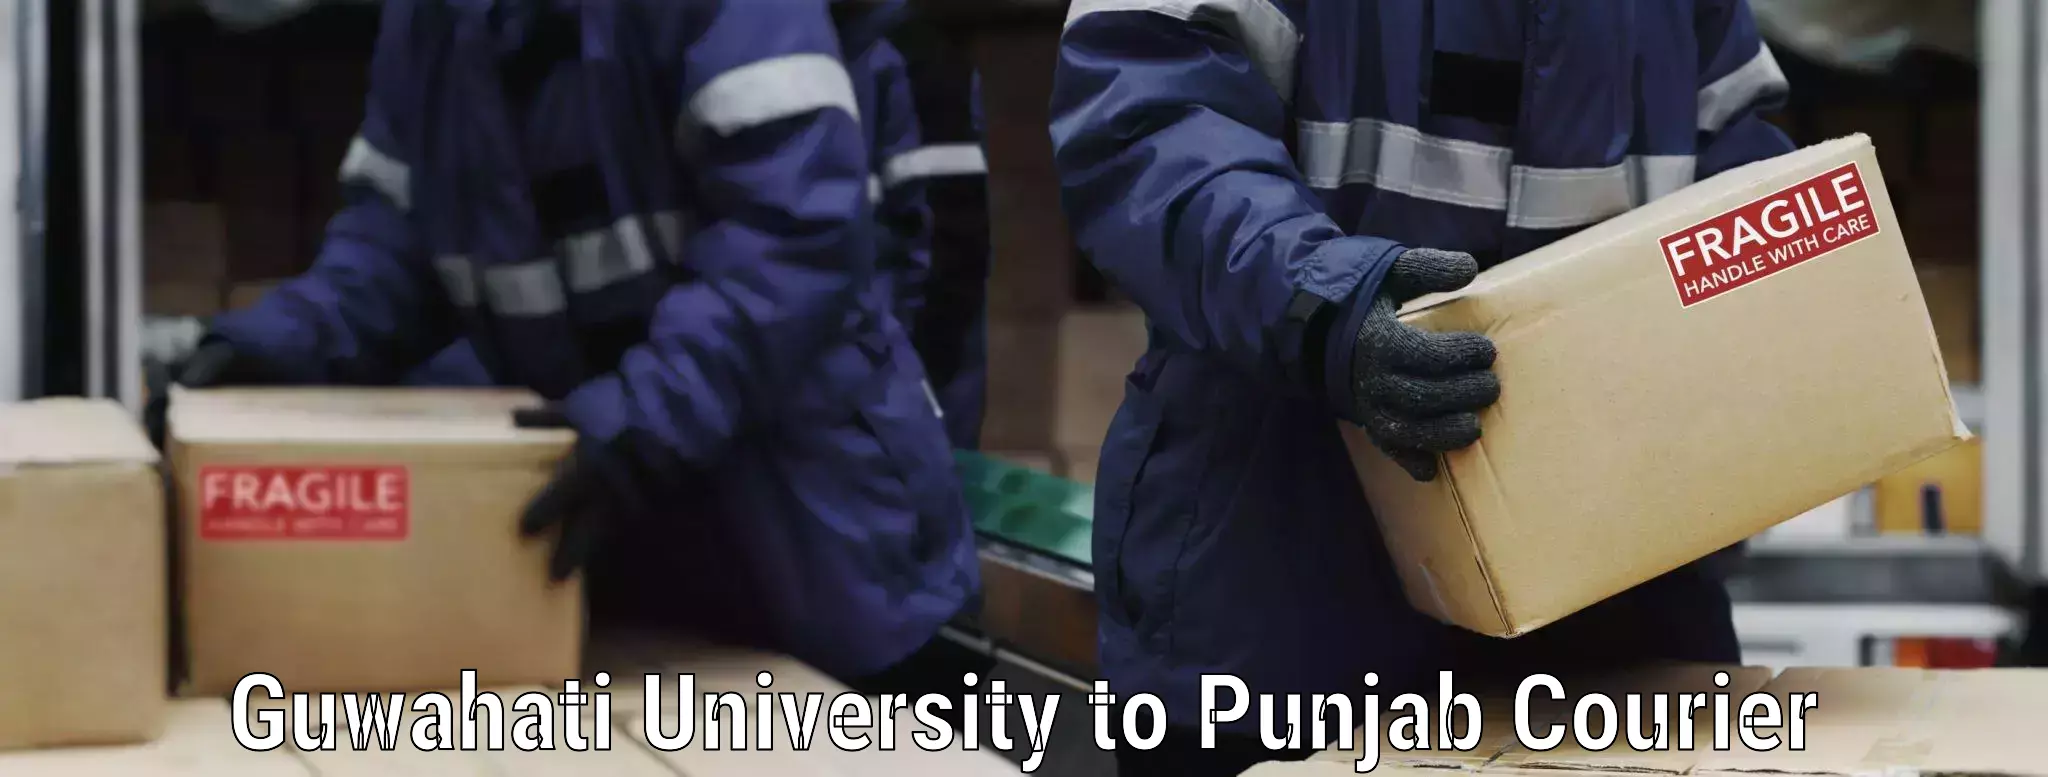 Skilled movers Guwahati University to Punjab